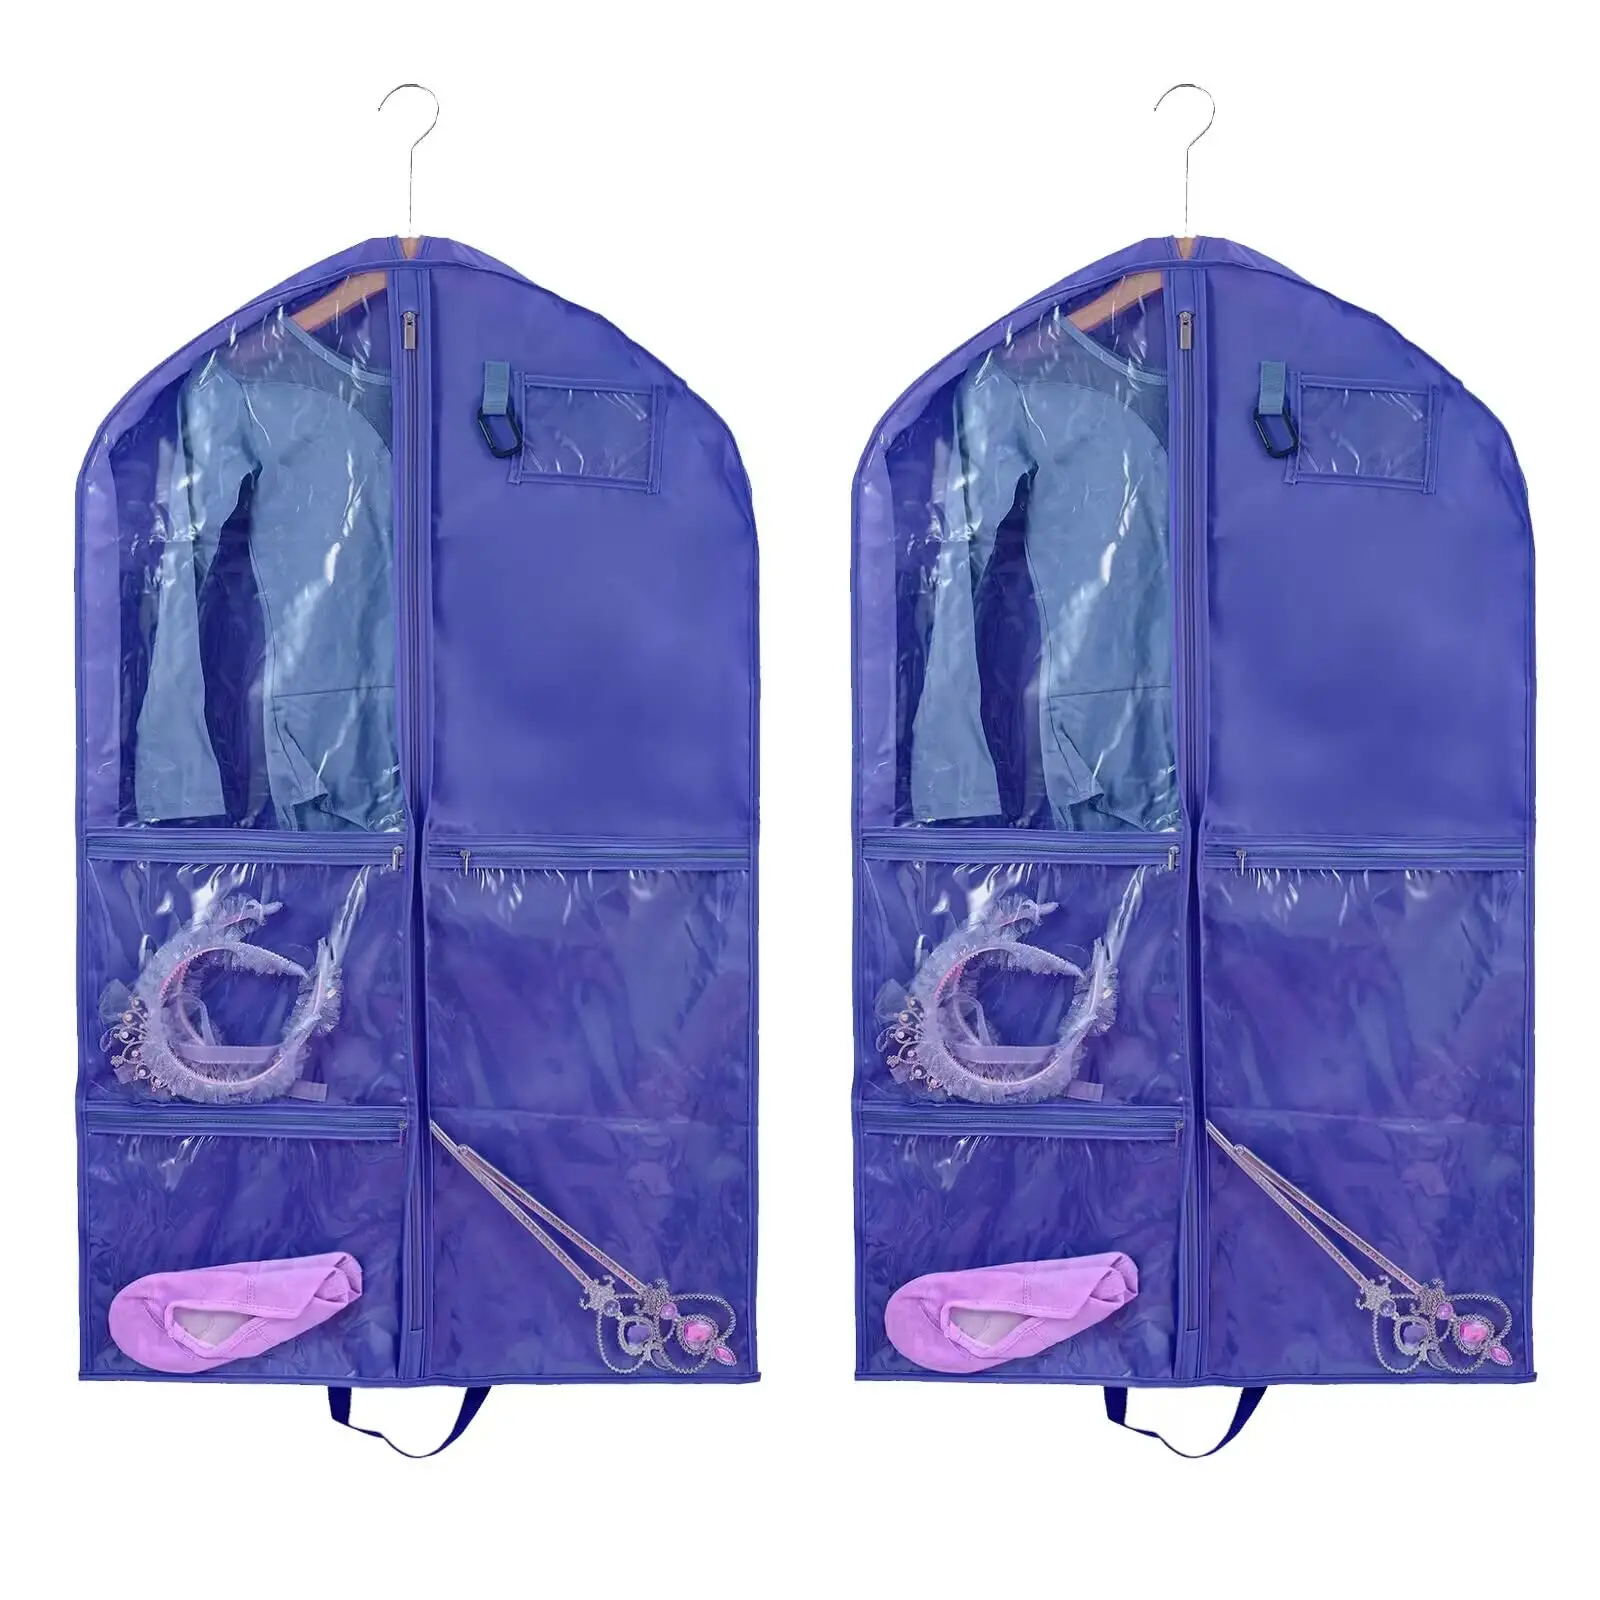 Oxford cloth children's dance dress storage bag washable clothing dustproof bag multi-purpose suit costume garment bag